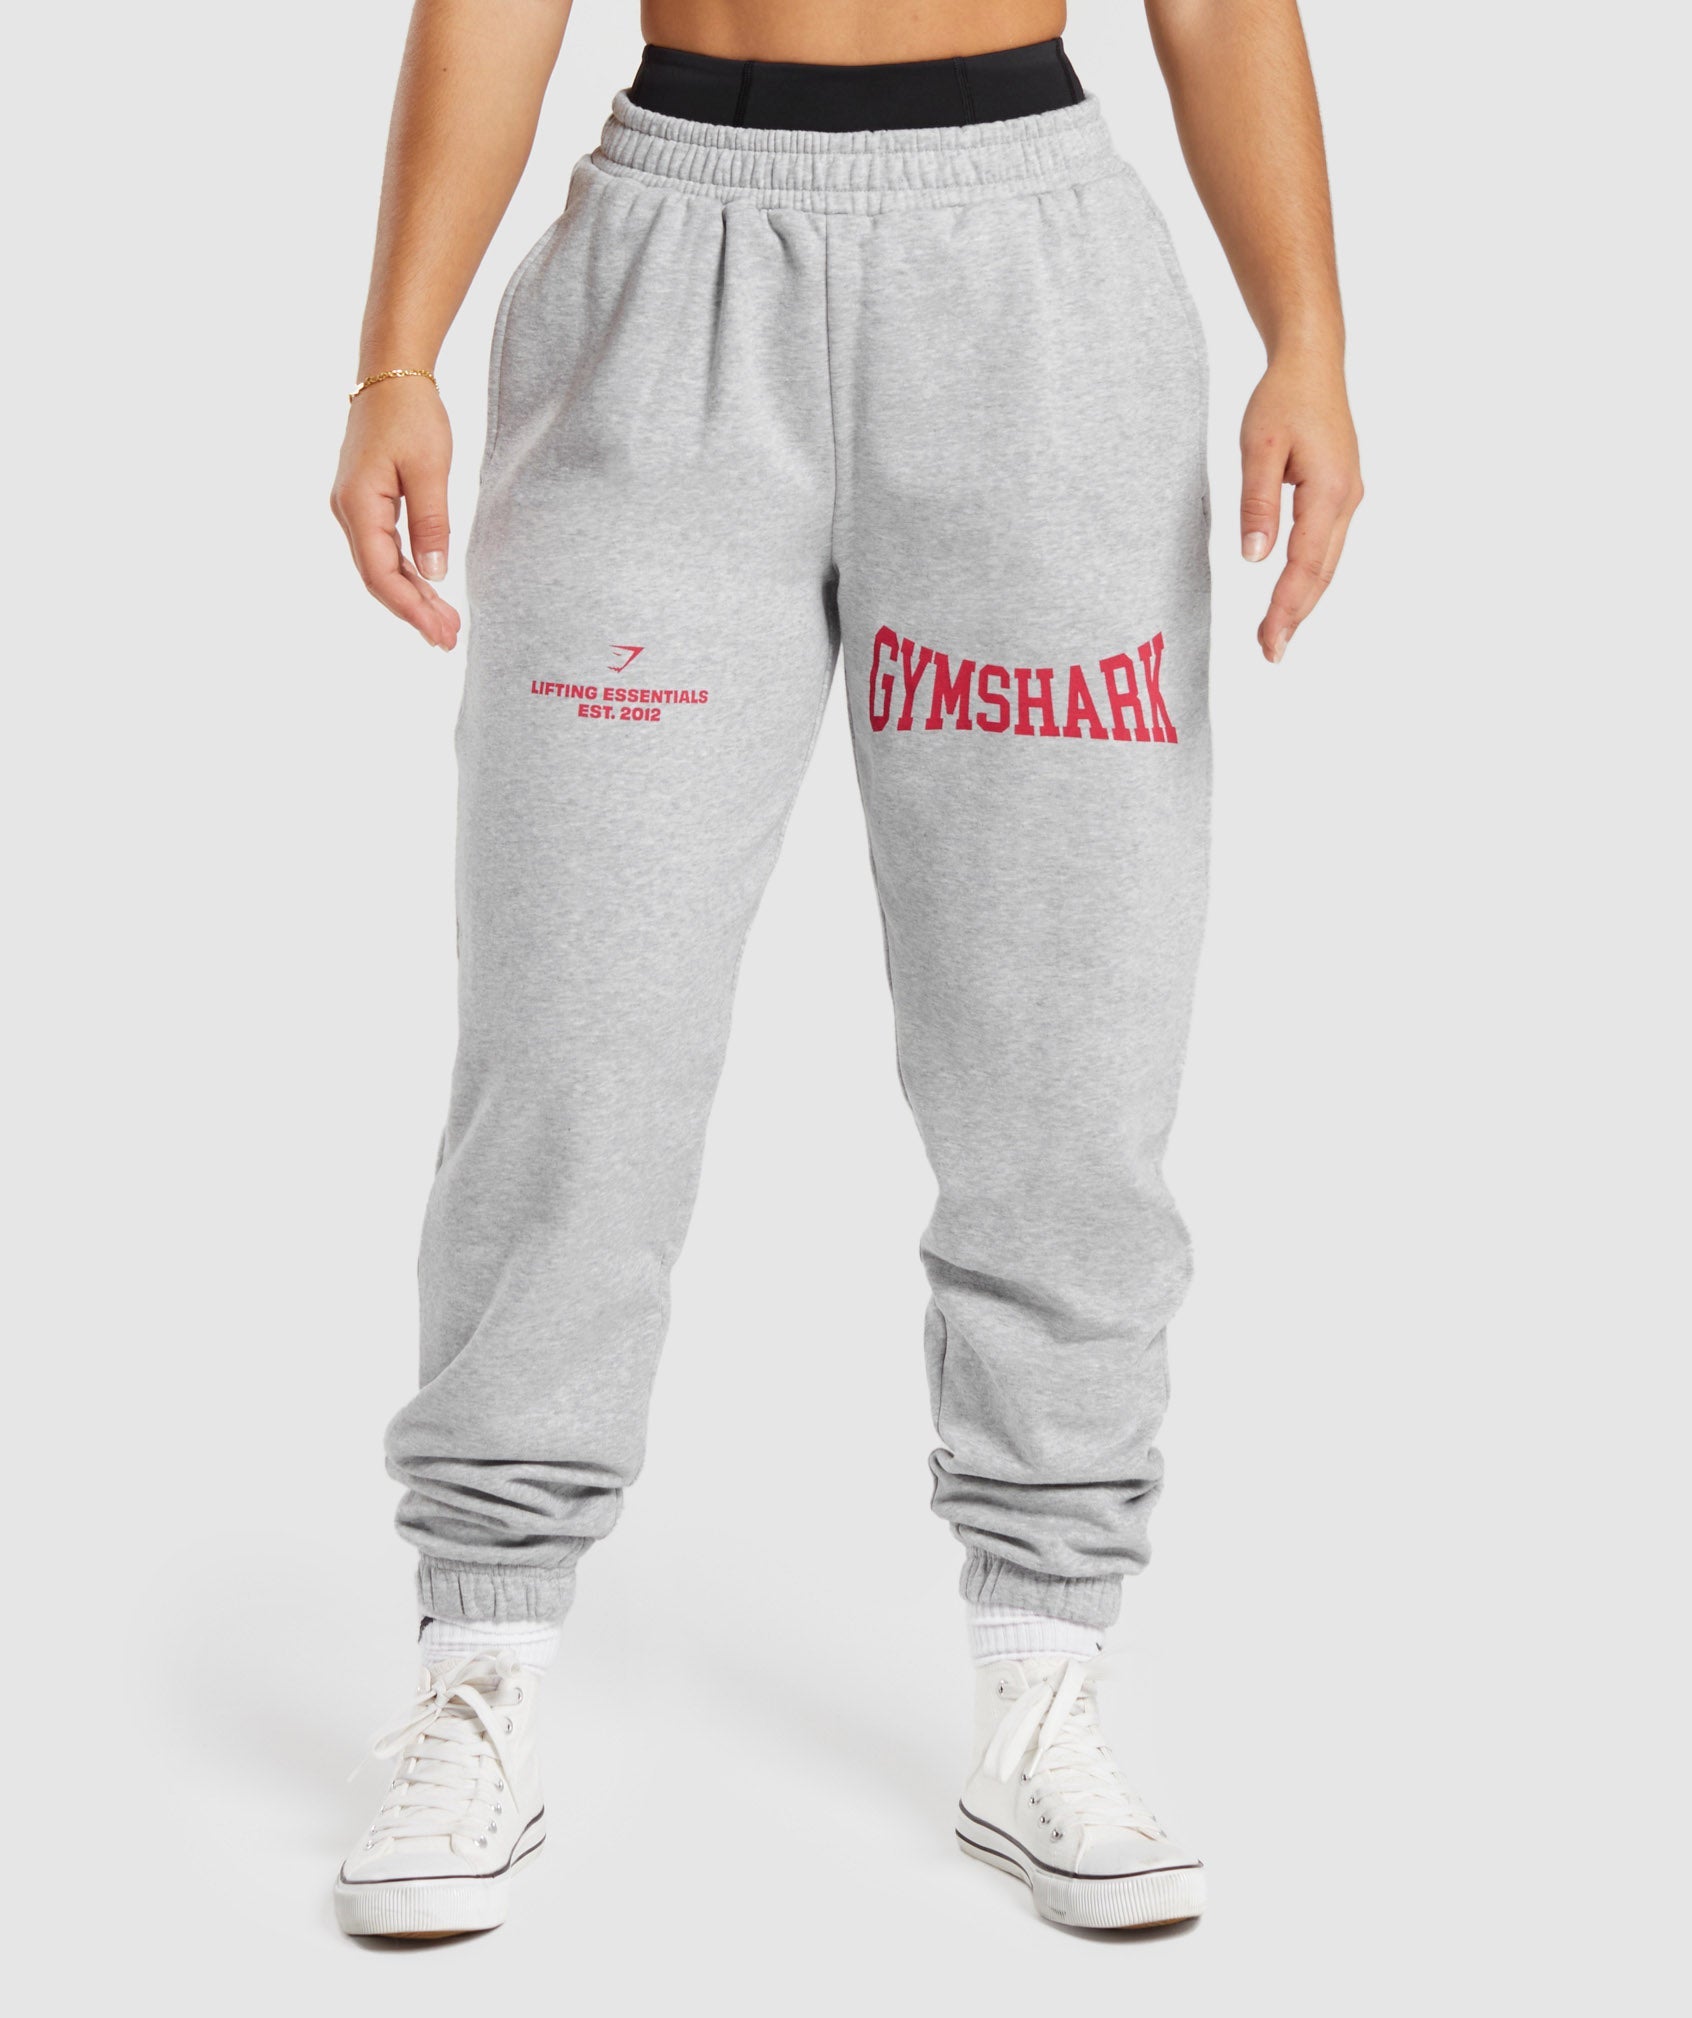 Gymshark Women's Medium Gray Knit Jogger Pants